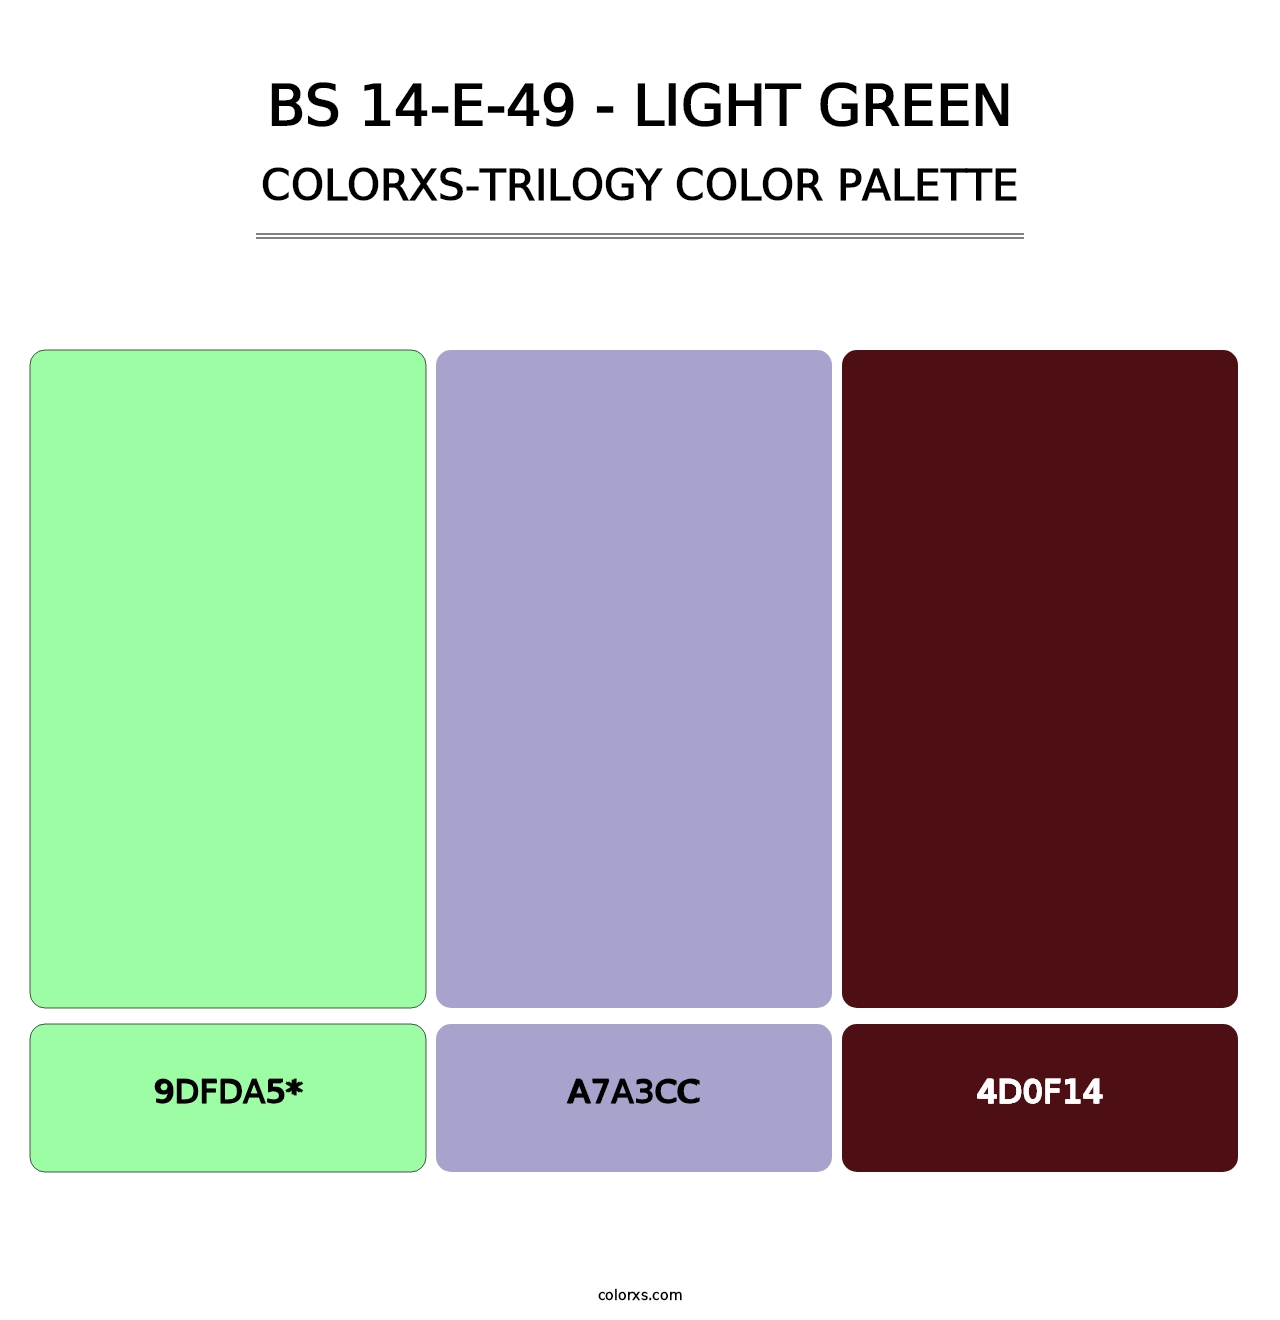 BS 14-E-49 - Light Green - Colorxs Trilogy Palette